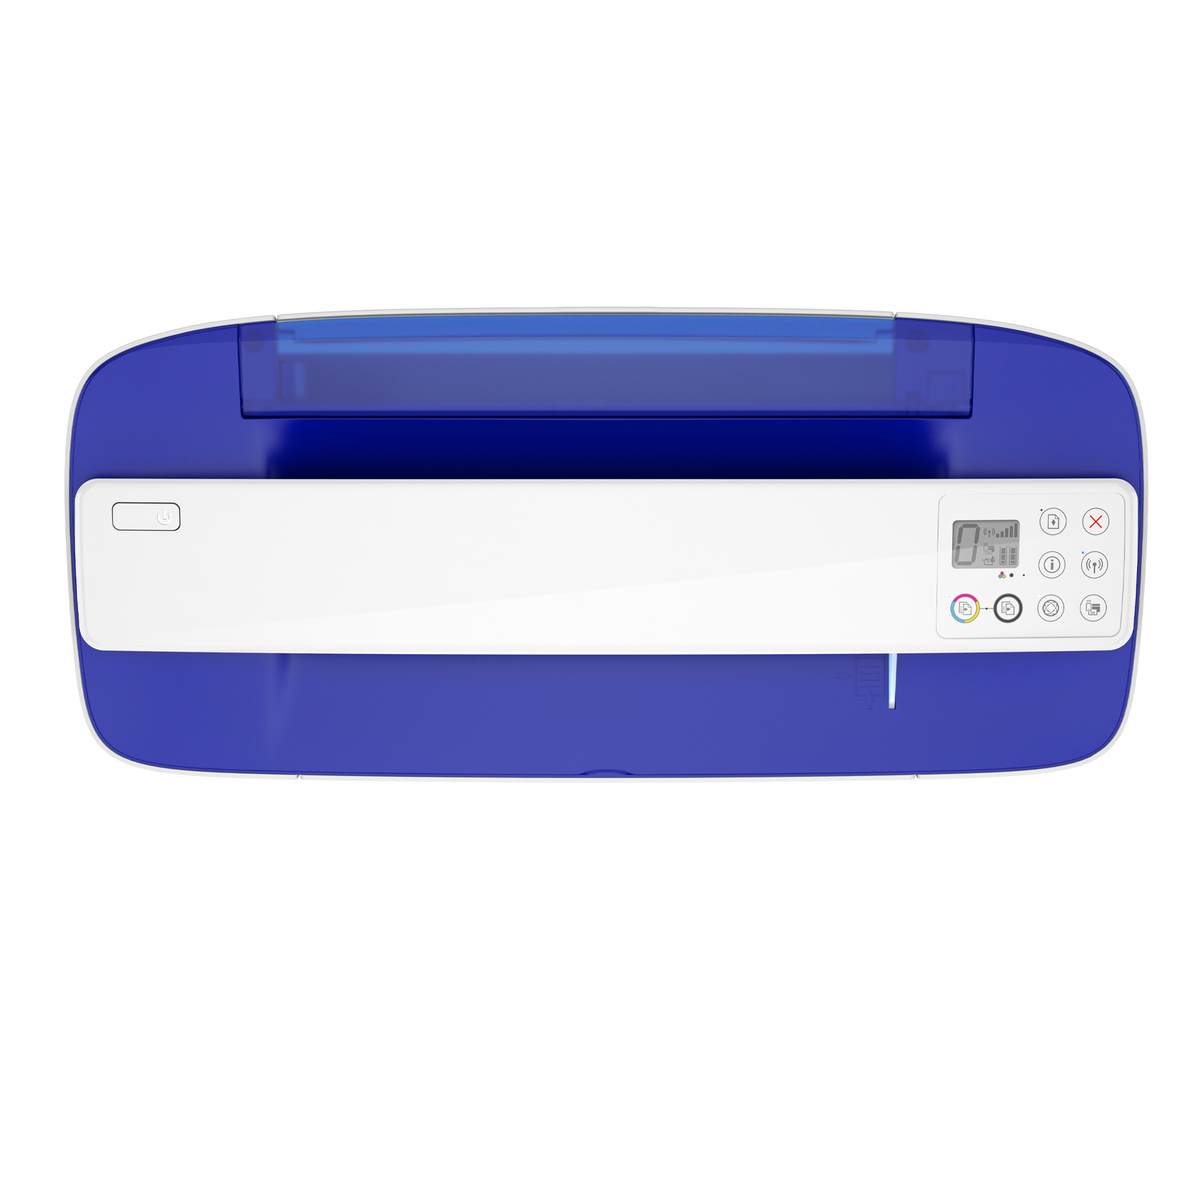 HP Deskjet Ink Advantage 3790 Wireless All-in-One Printer, Dark Blue, T8W47C